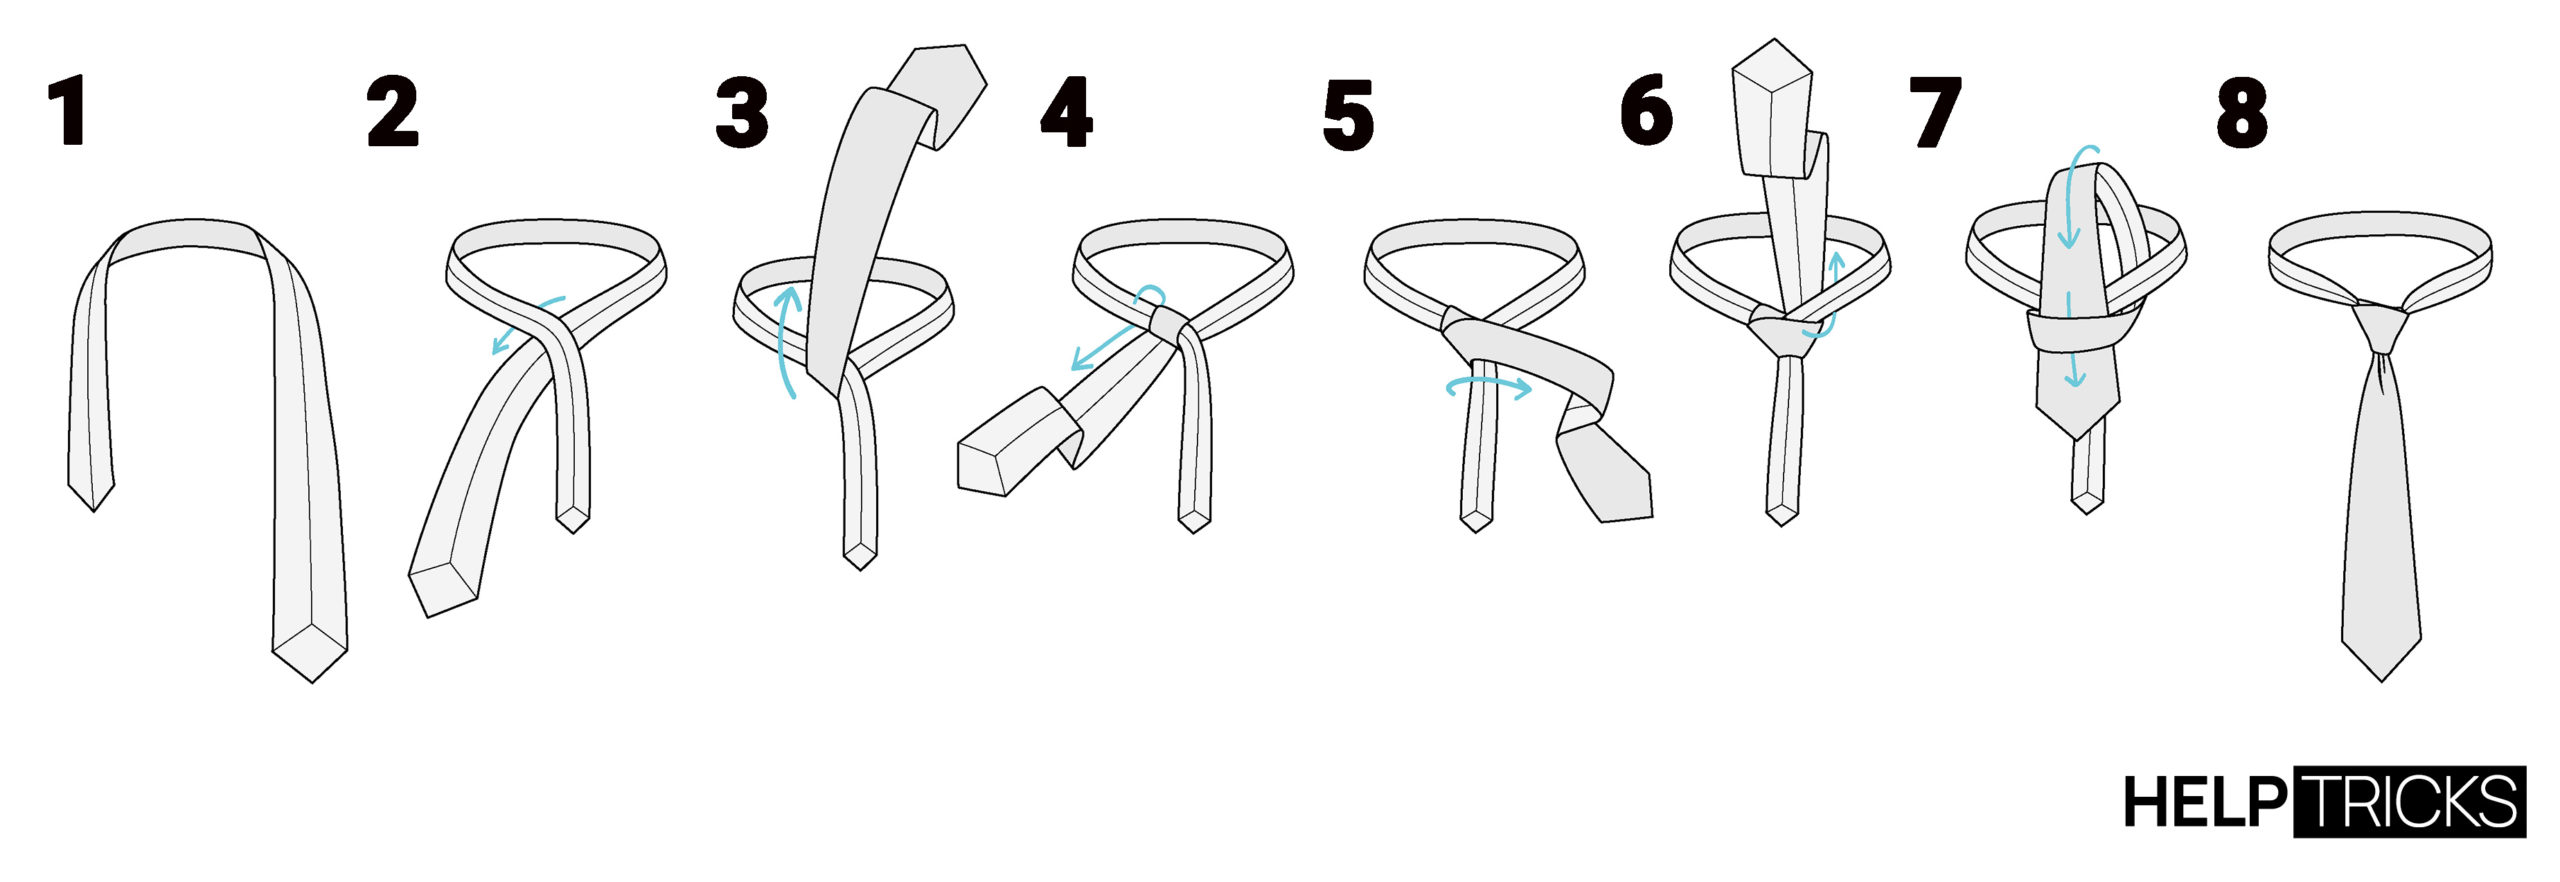 How to tie a Tie - Pratt Knot